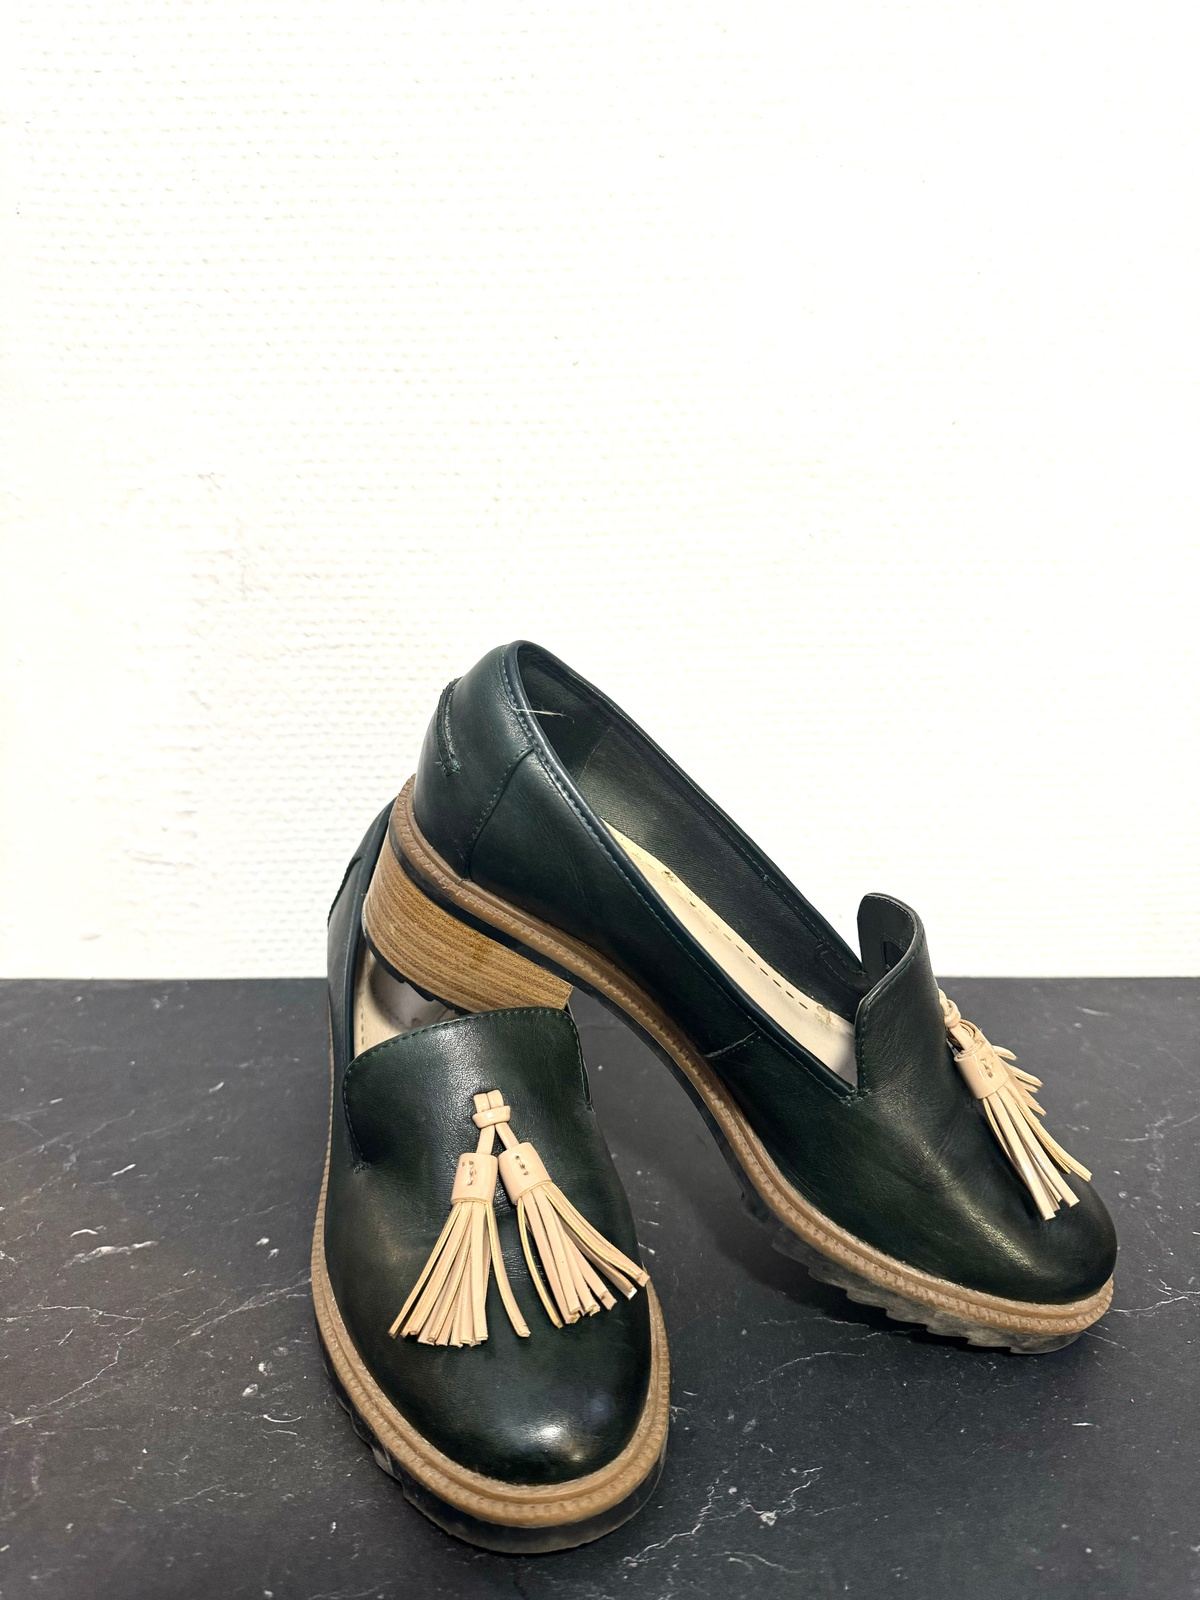 Vintage Clarks Shoes